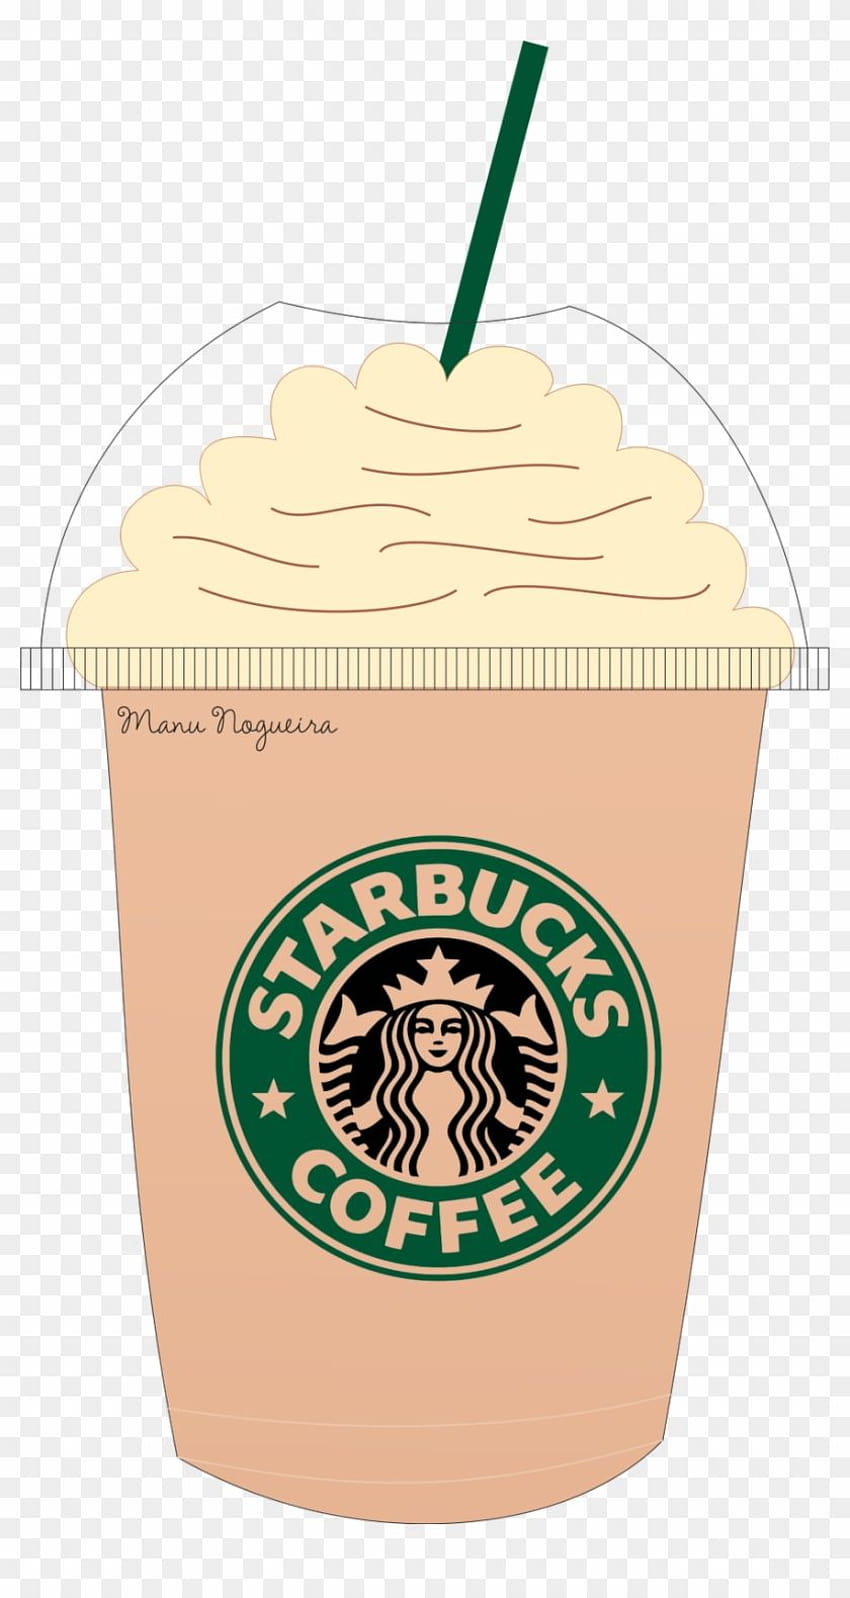 Download Coffee Frappuccino Starbucks Drawing Free HD Image HQ PNG Image   FreePNGImg